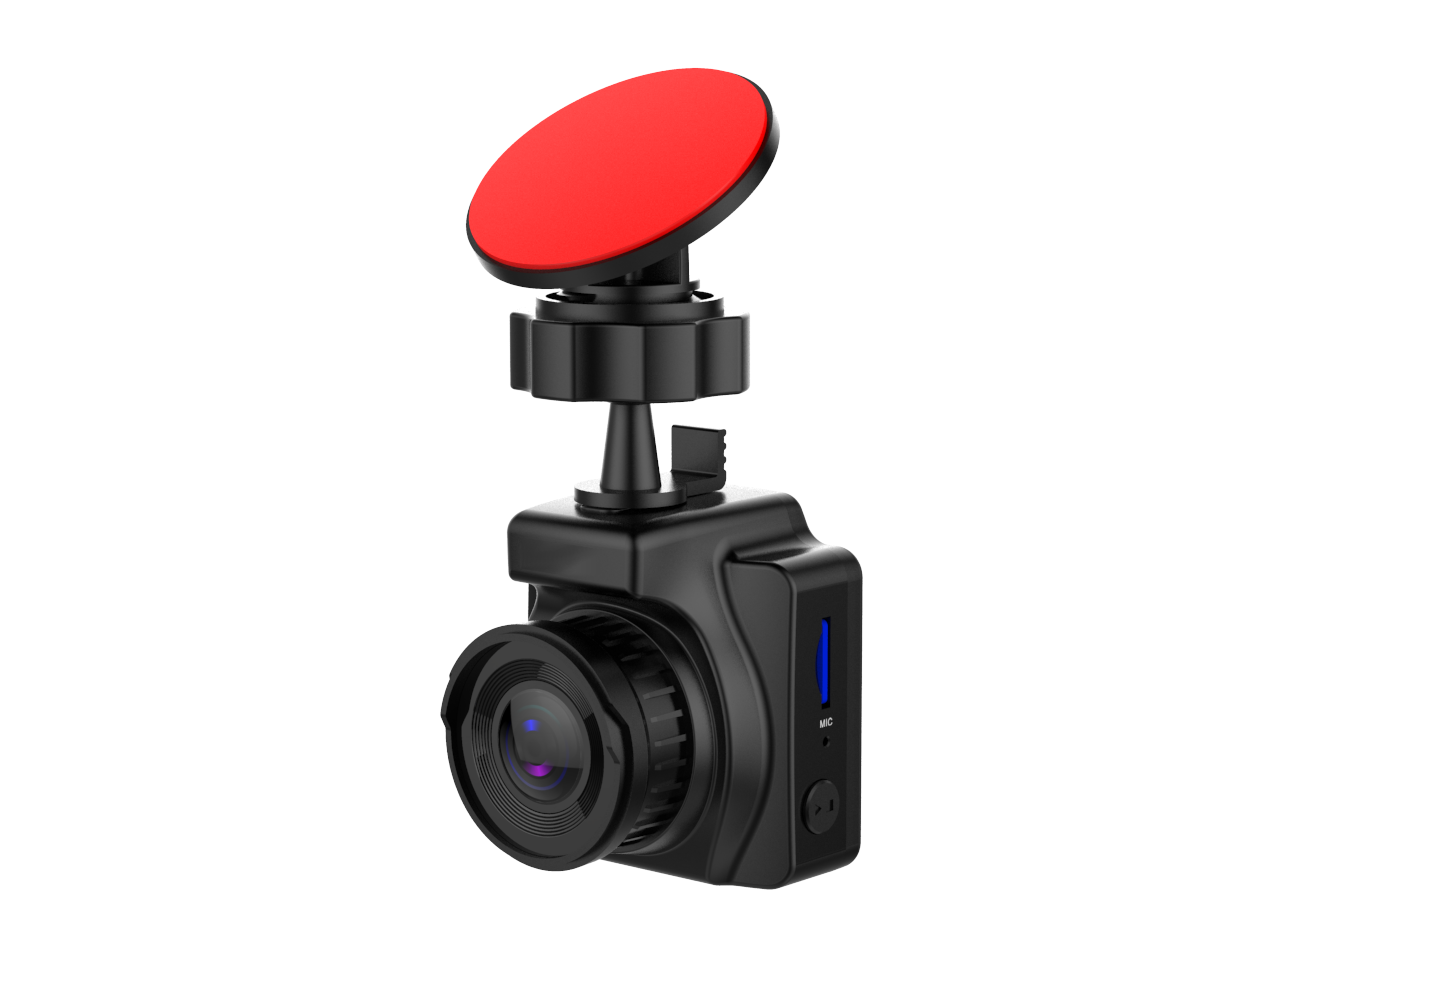 Pokročilá autokamera s FULL HD kvalitou obrazu videoCAR S310